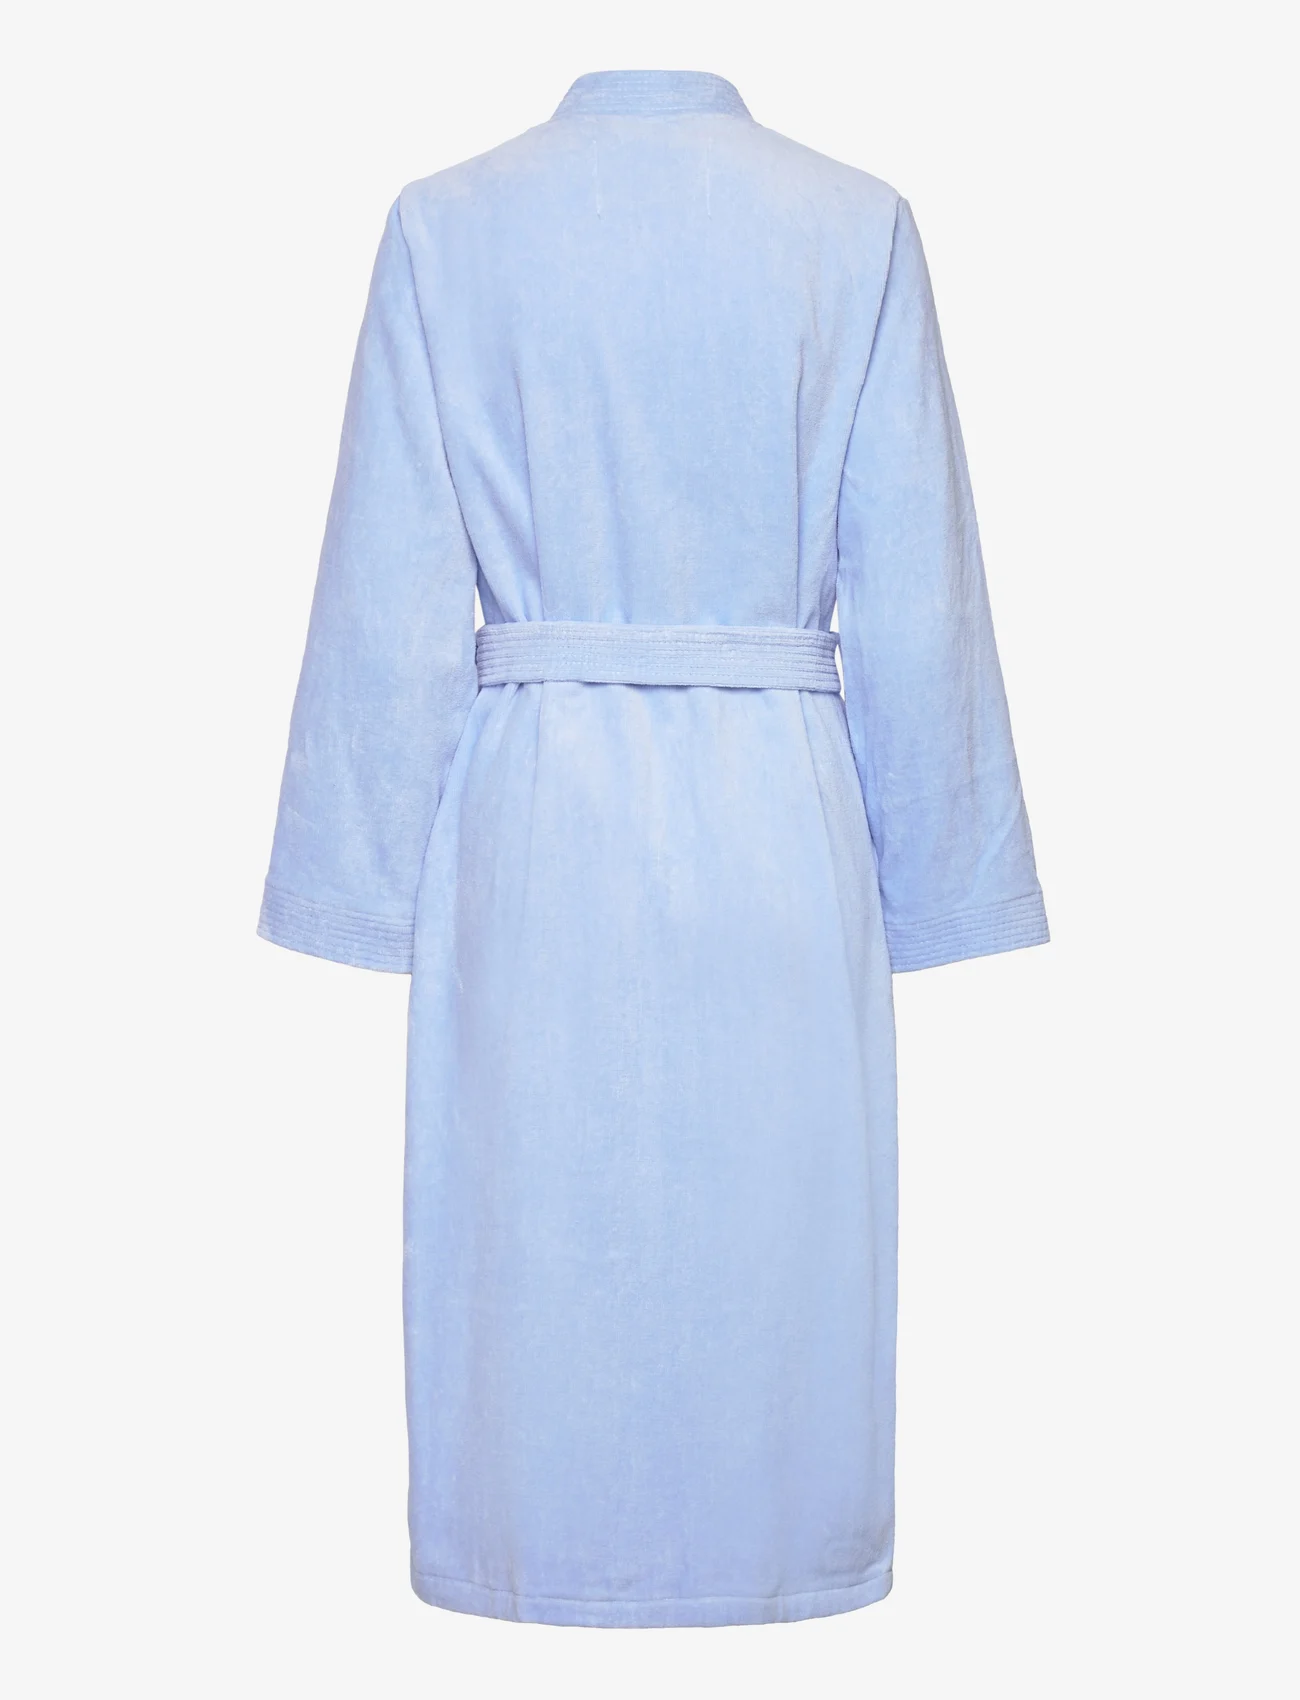 Rosemunde - Organic robe - birthday gifts - serenity blue - 1